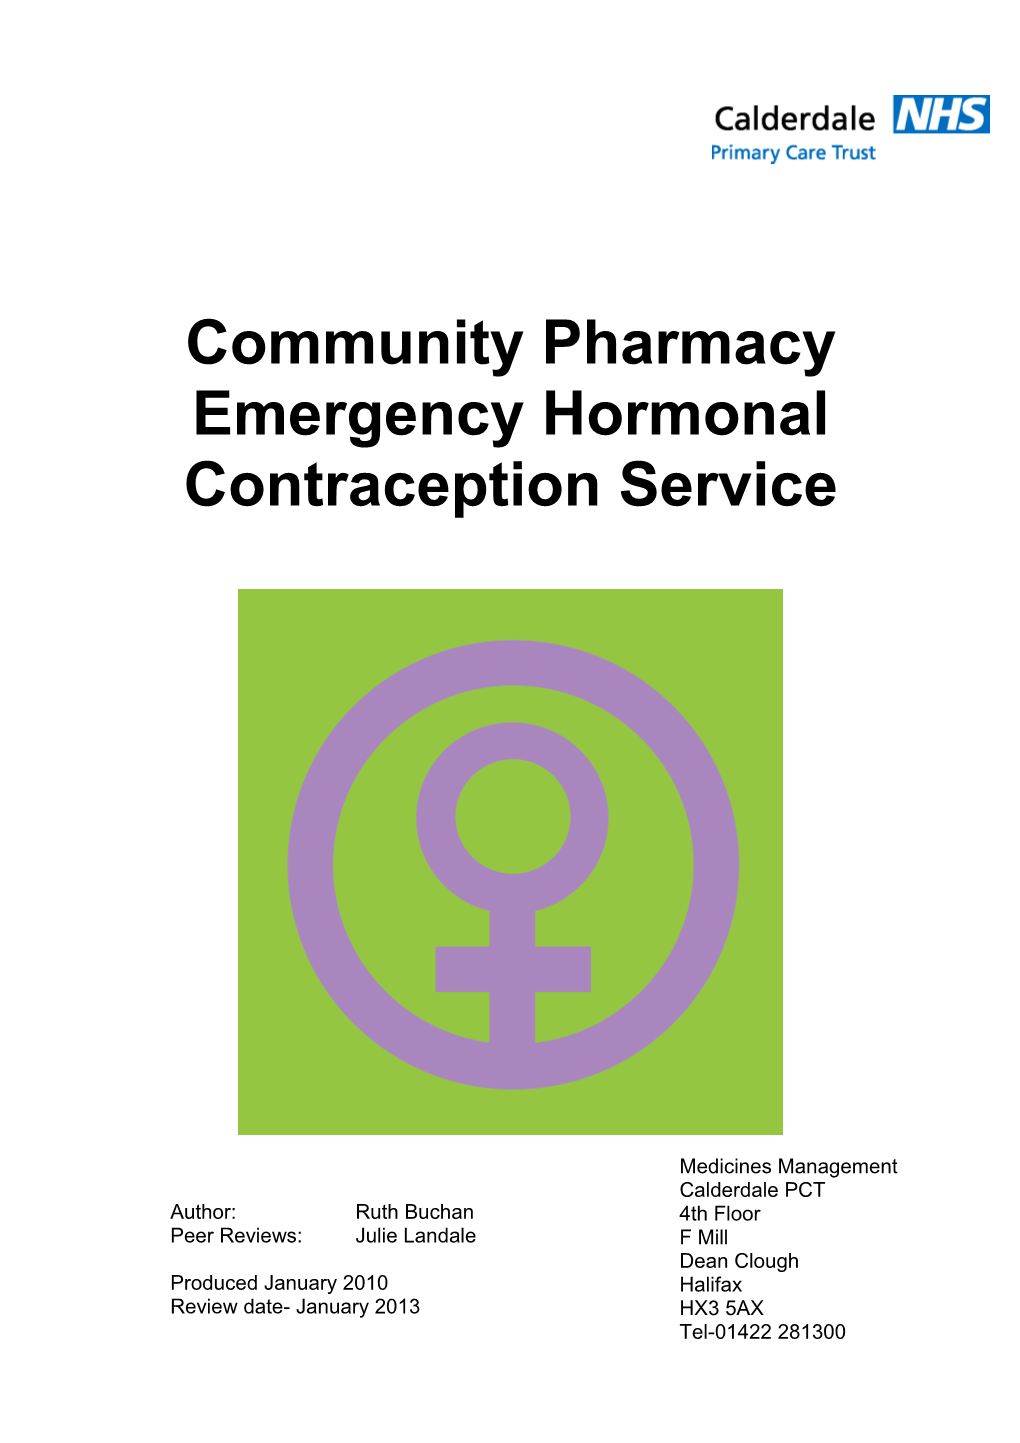 Community Pharmacy Emergency Hormonal Contraception Service